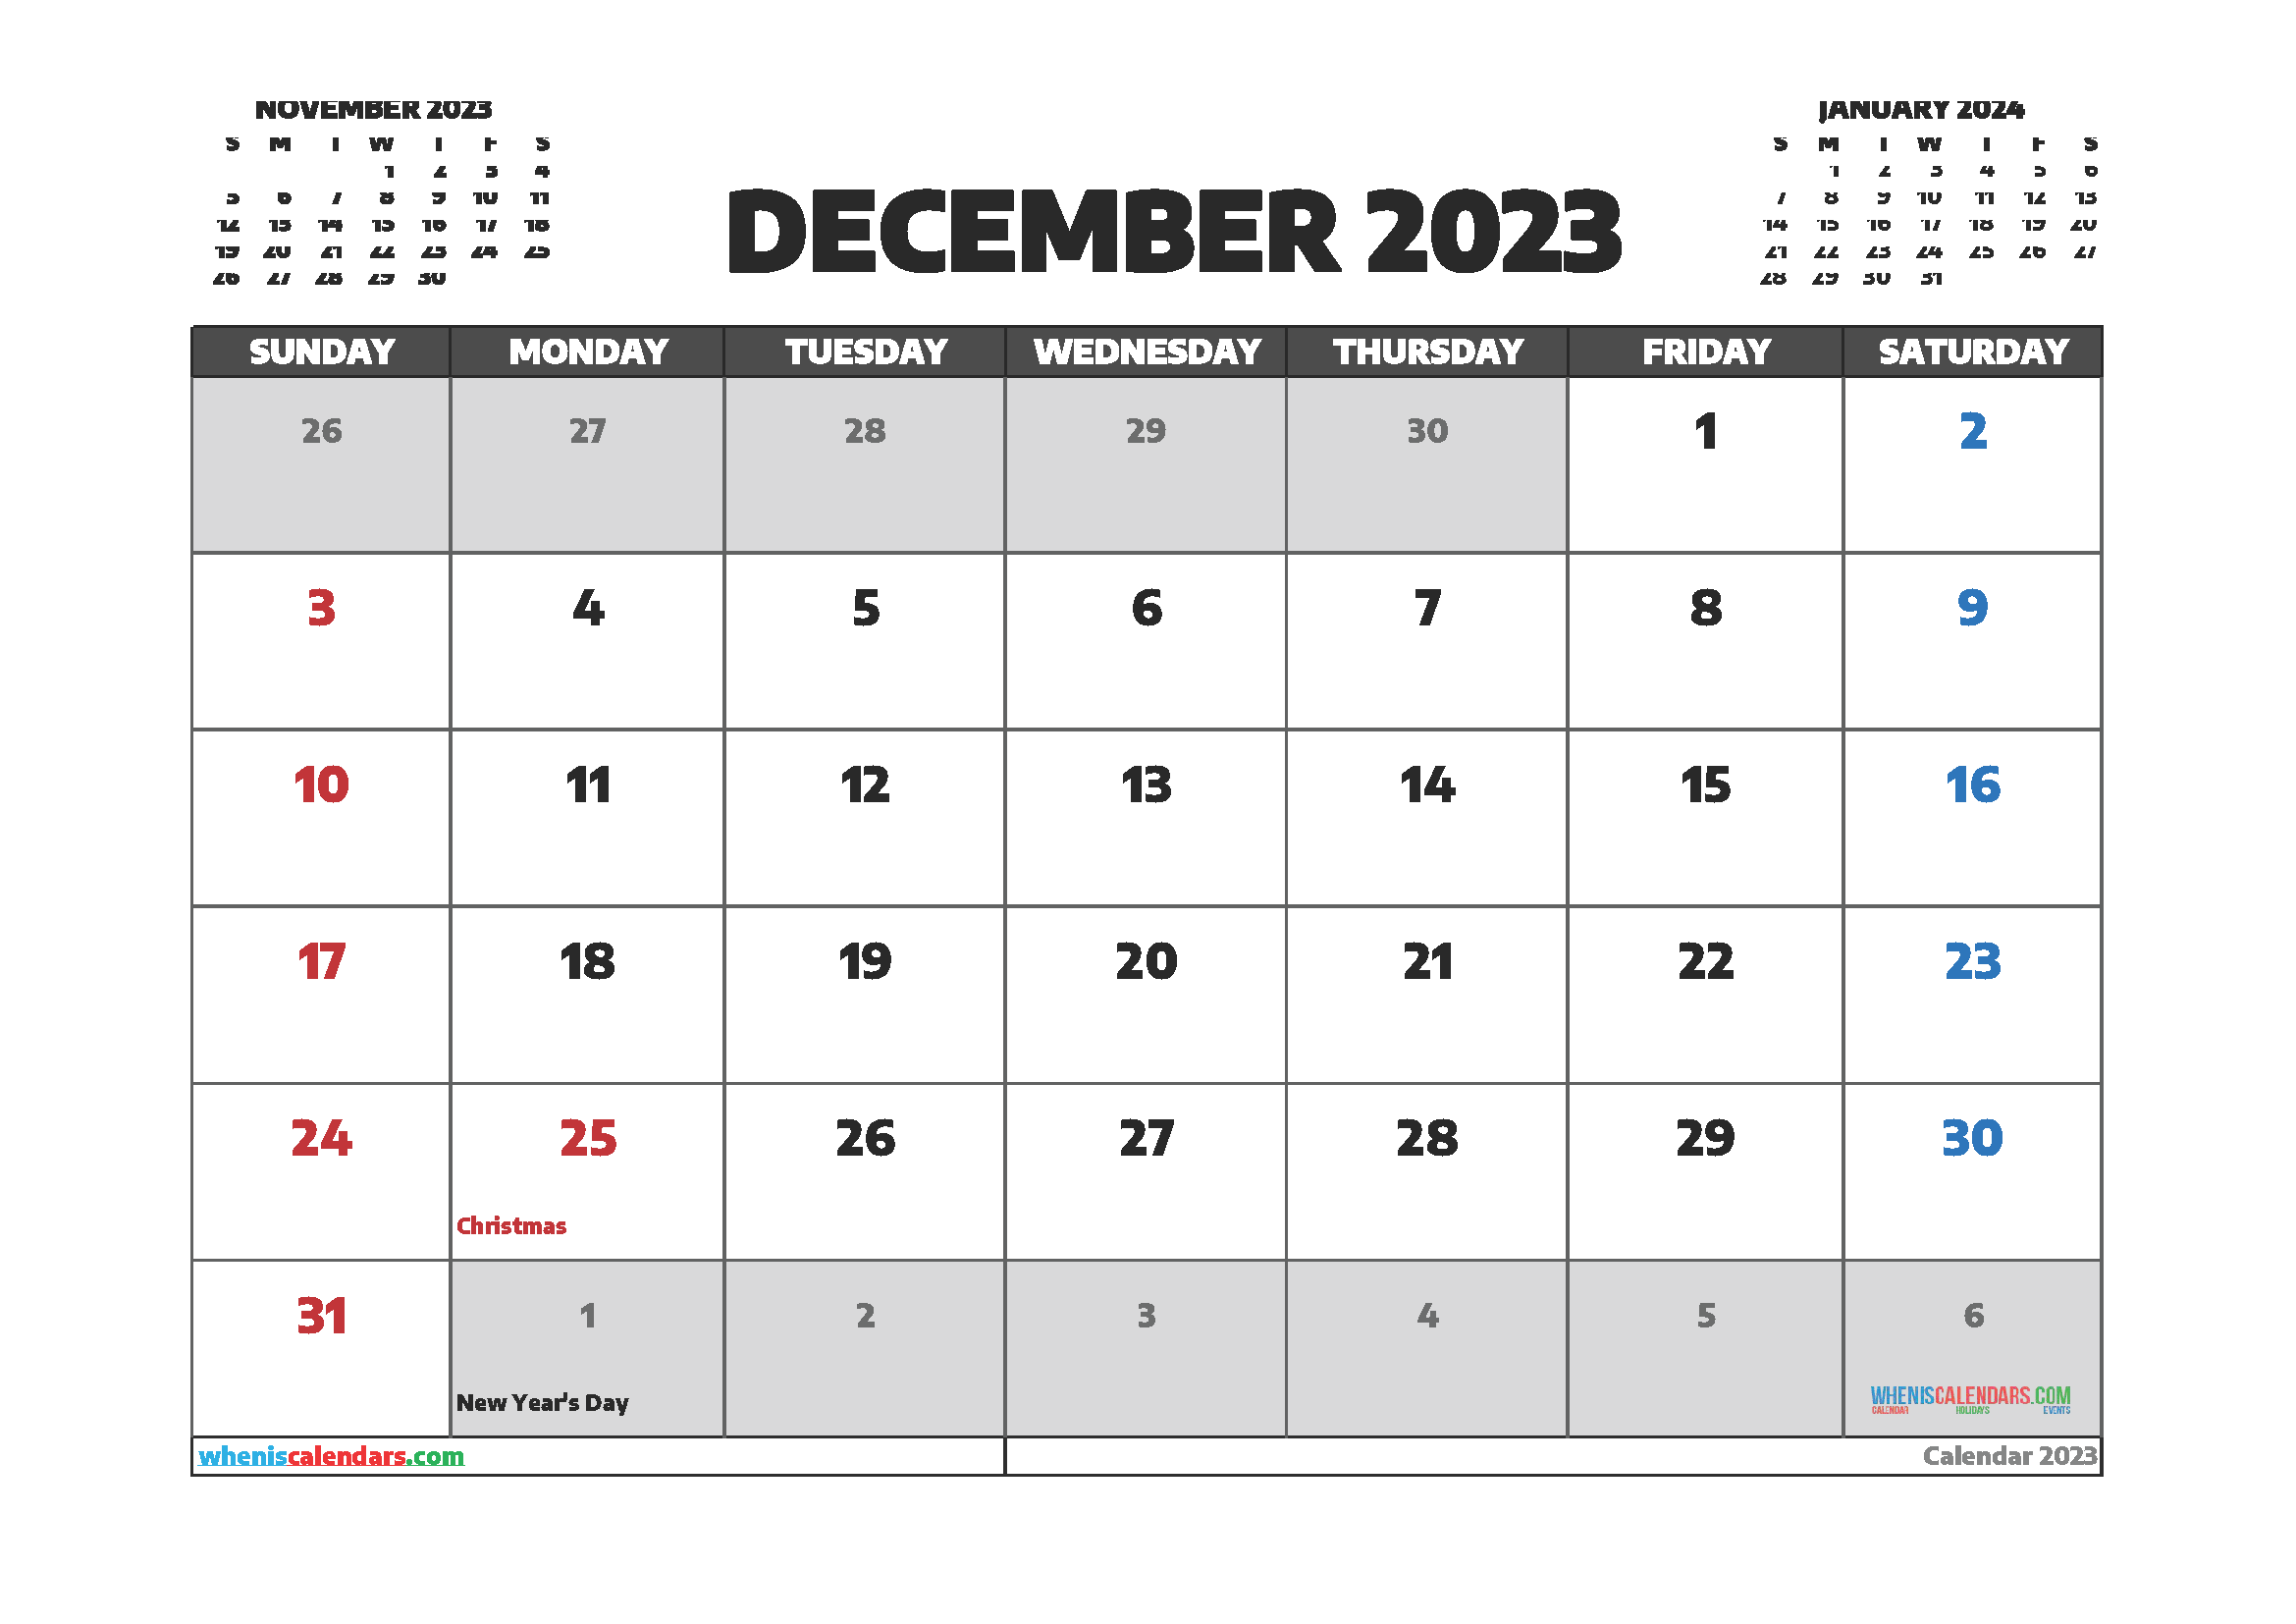 2023 Calendar December 2023 Calendar